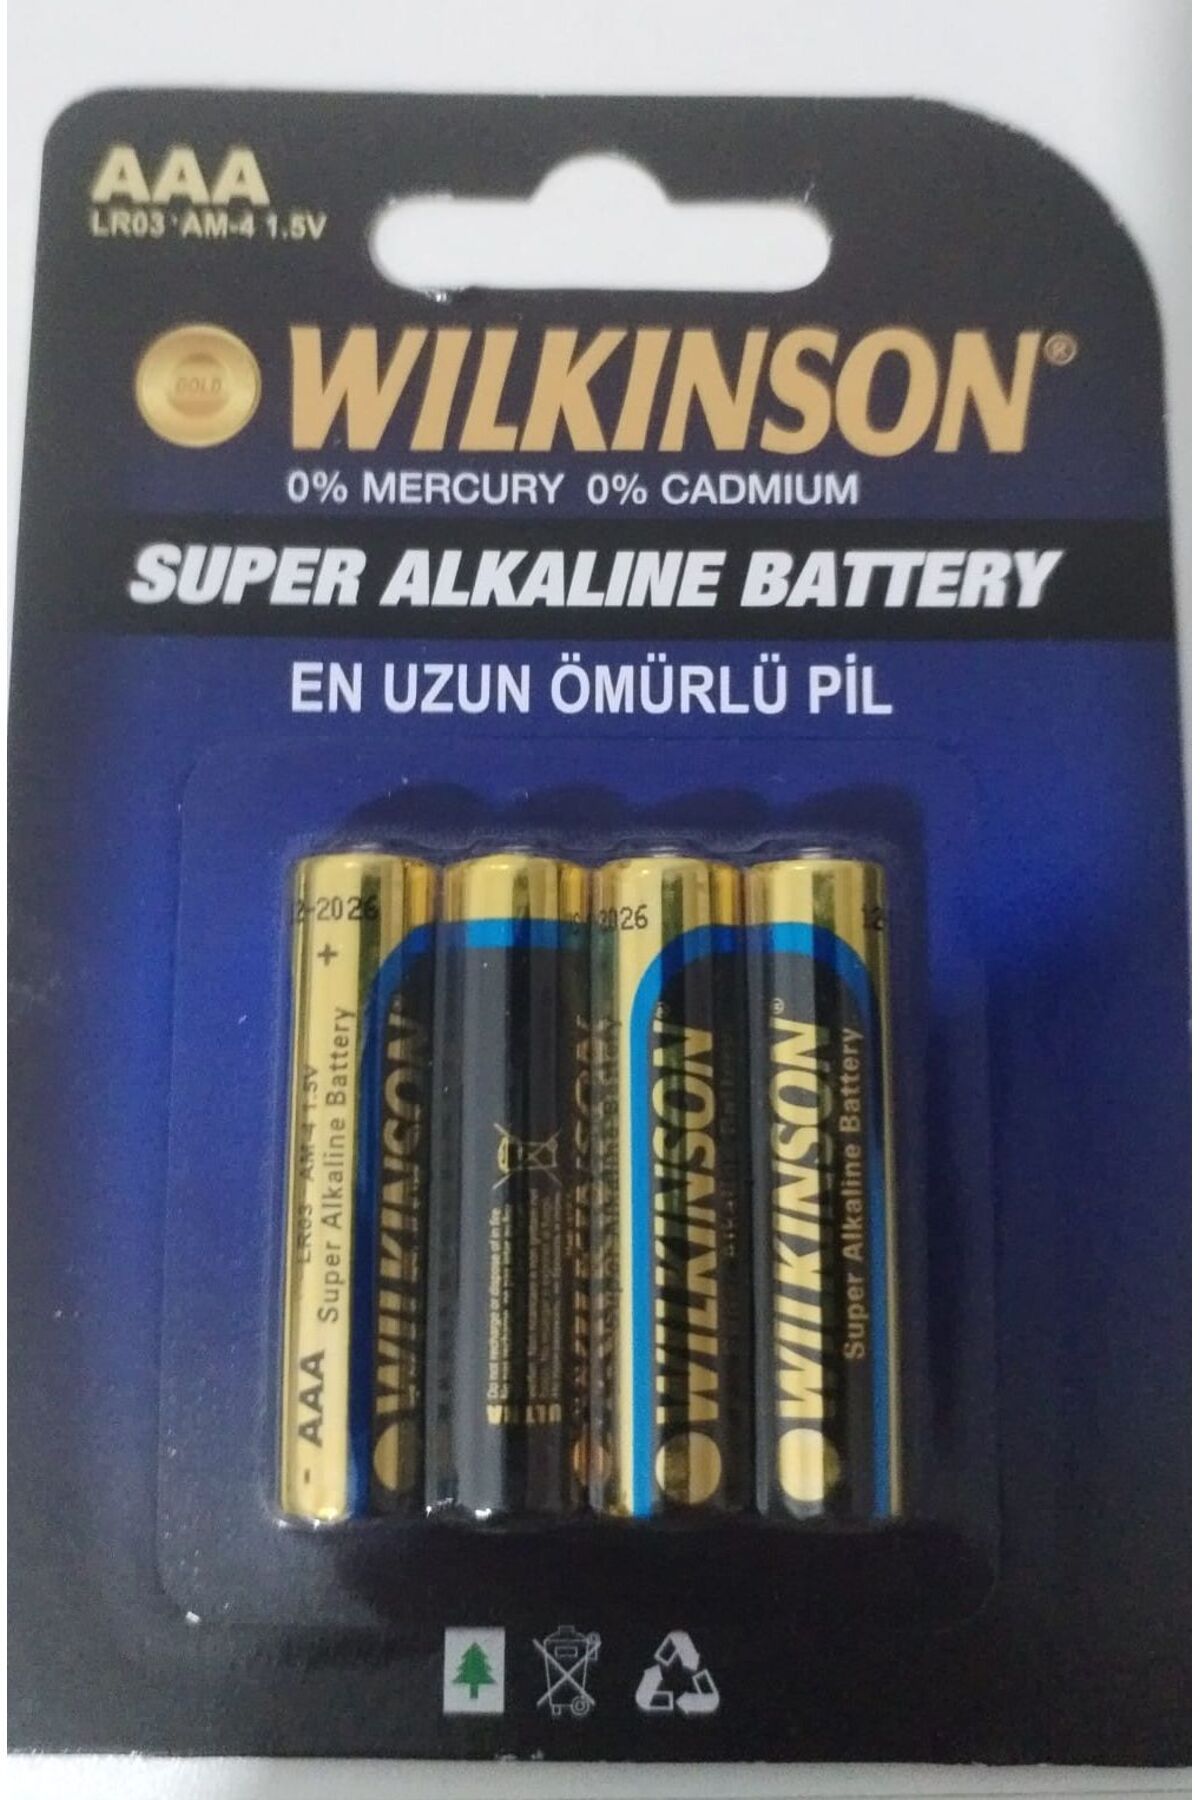 Wilkinson Super Alkaline Battery 4 lü paket, toplam 16 adet tekli pil